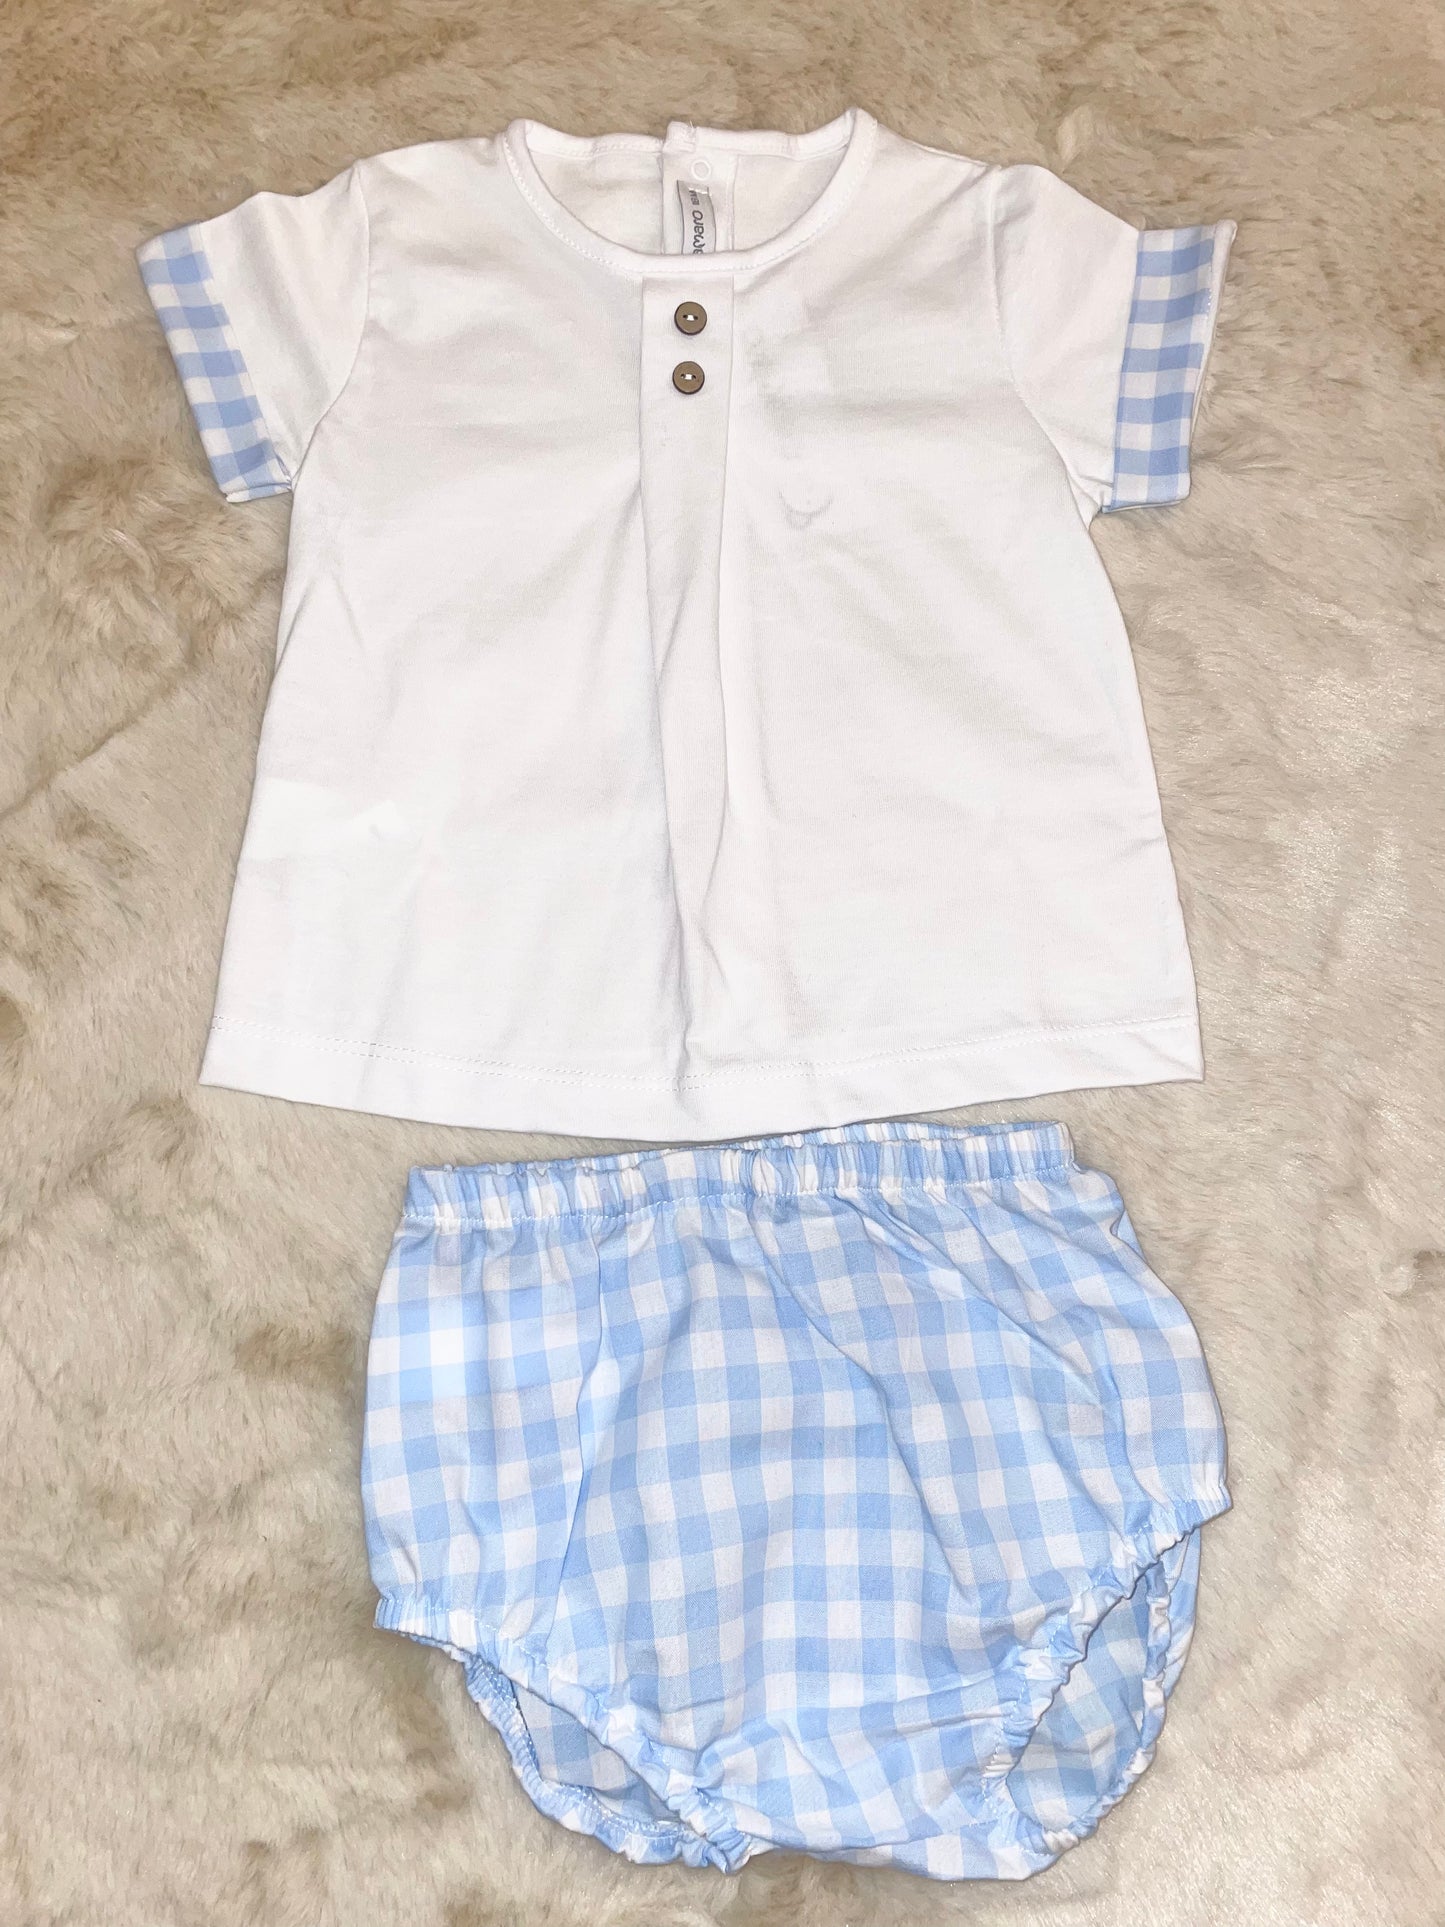 Calamaro Baby Boys White Cotton Top, Blue Gingham Shorts